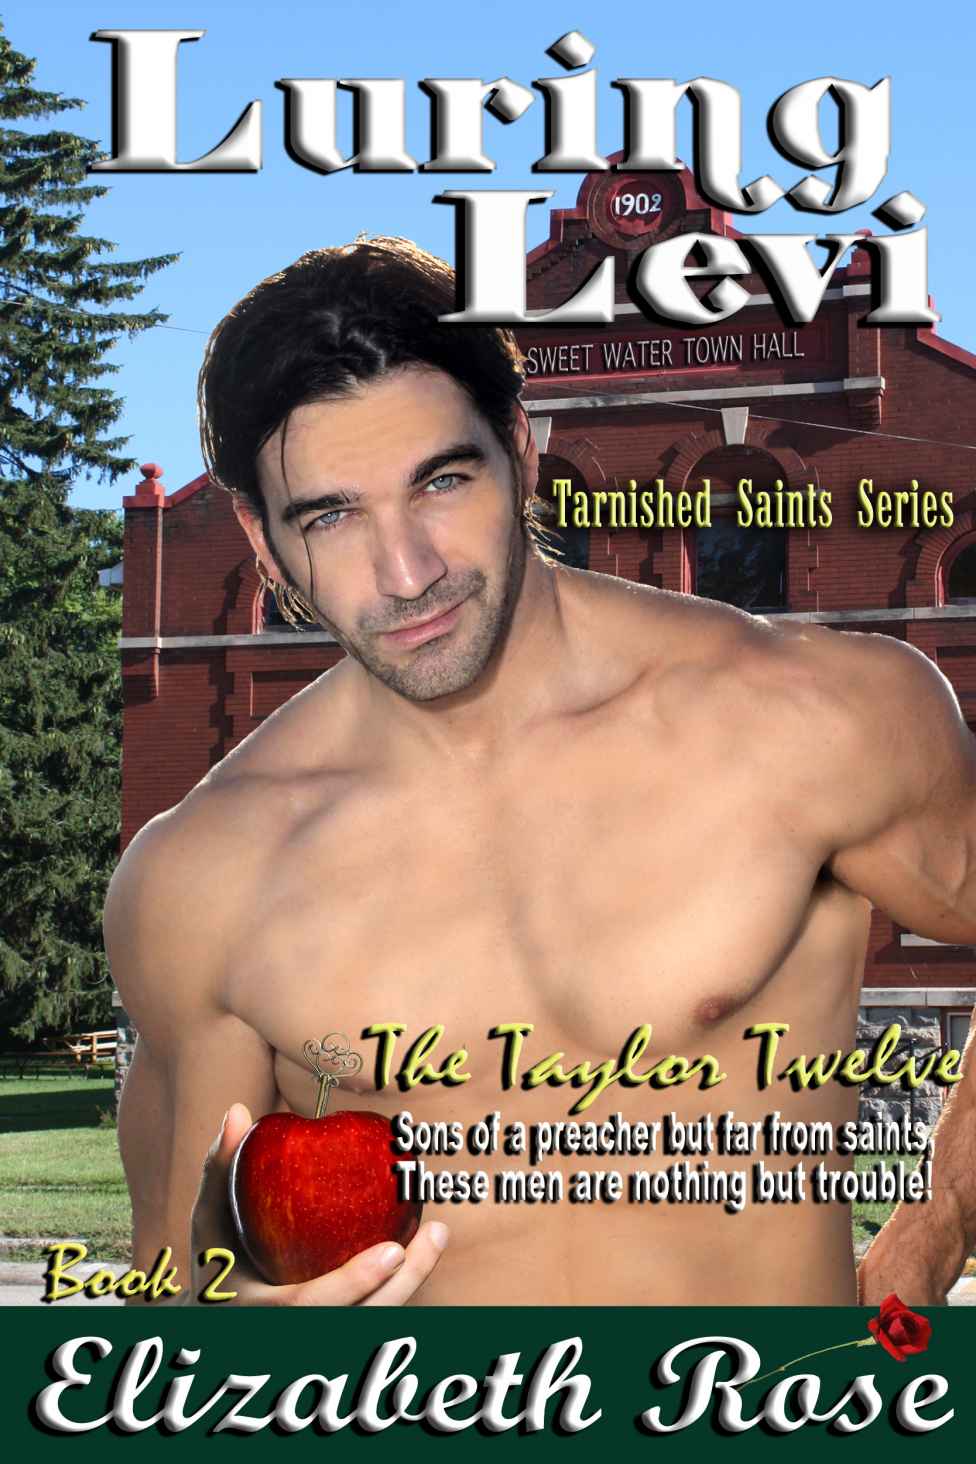 Luring Levi (Tarnished Saints Series Book 2) by Elizabeth Rose